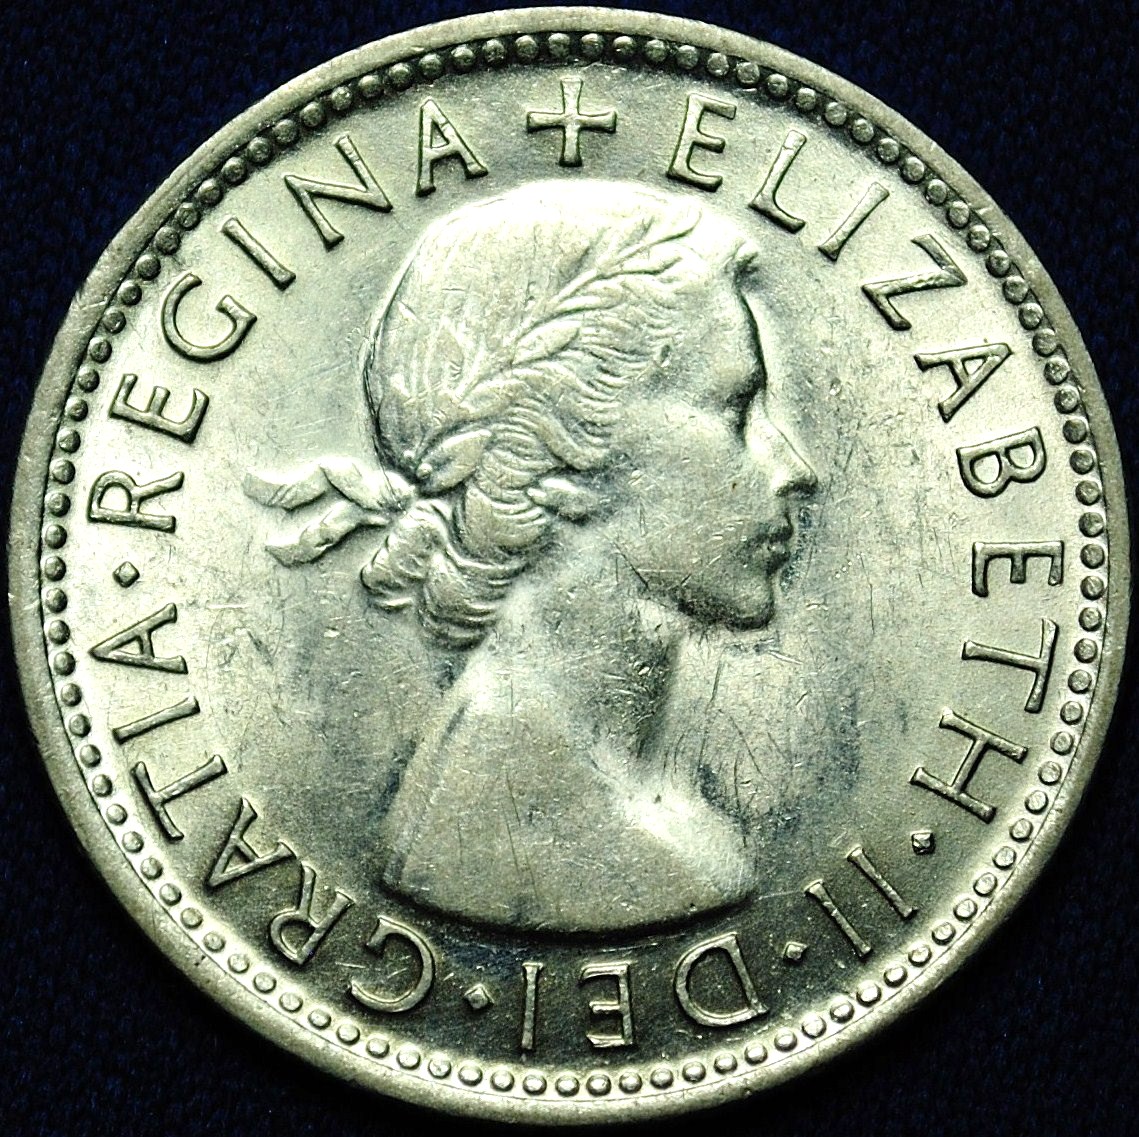 1954 Australian Shilling obverse